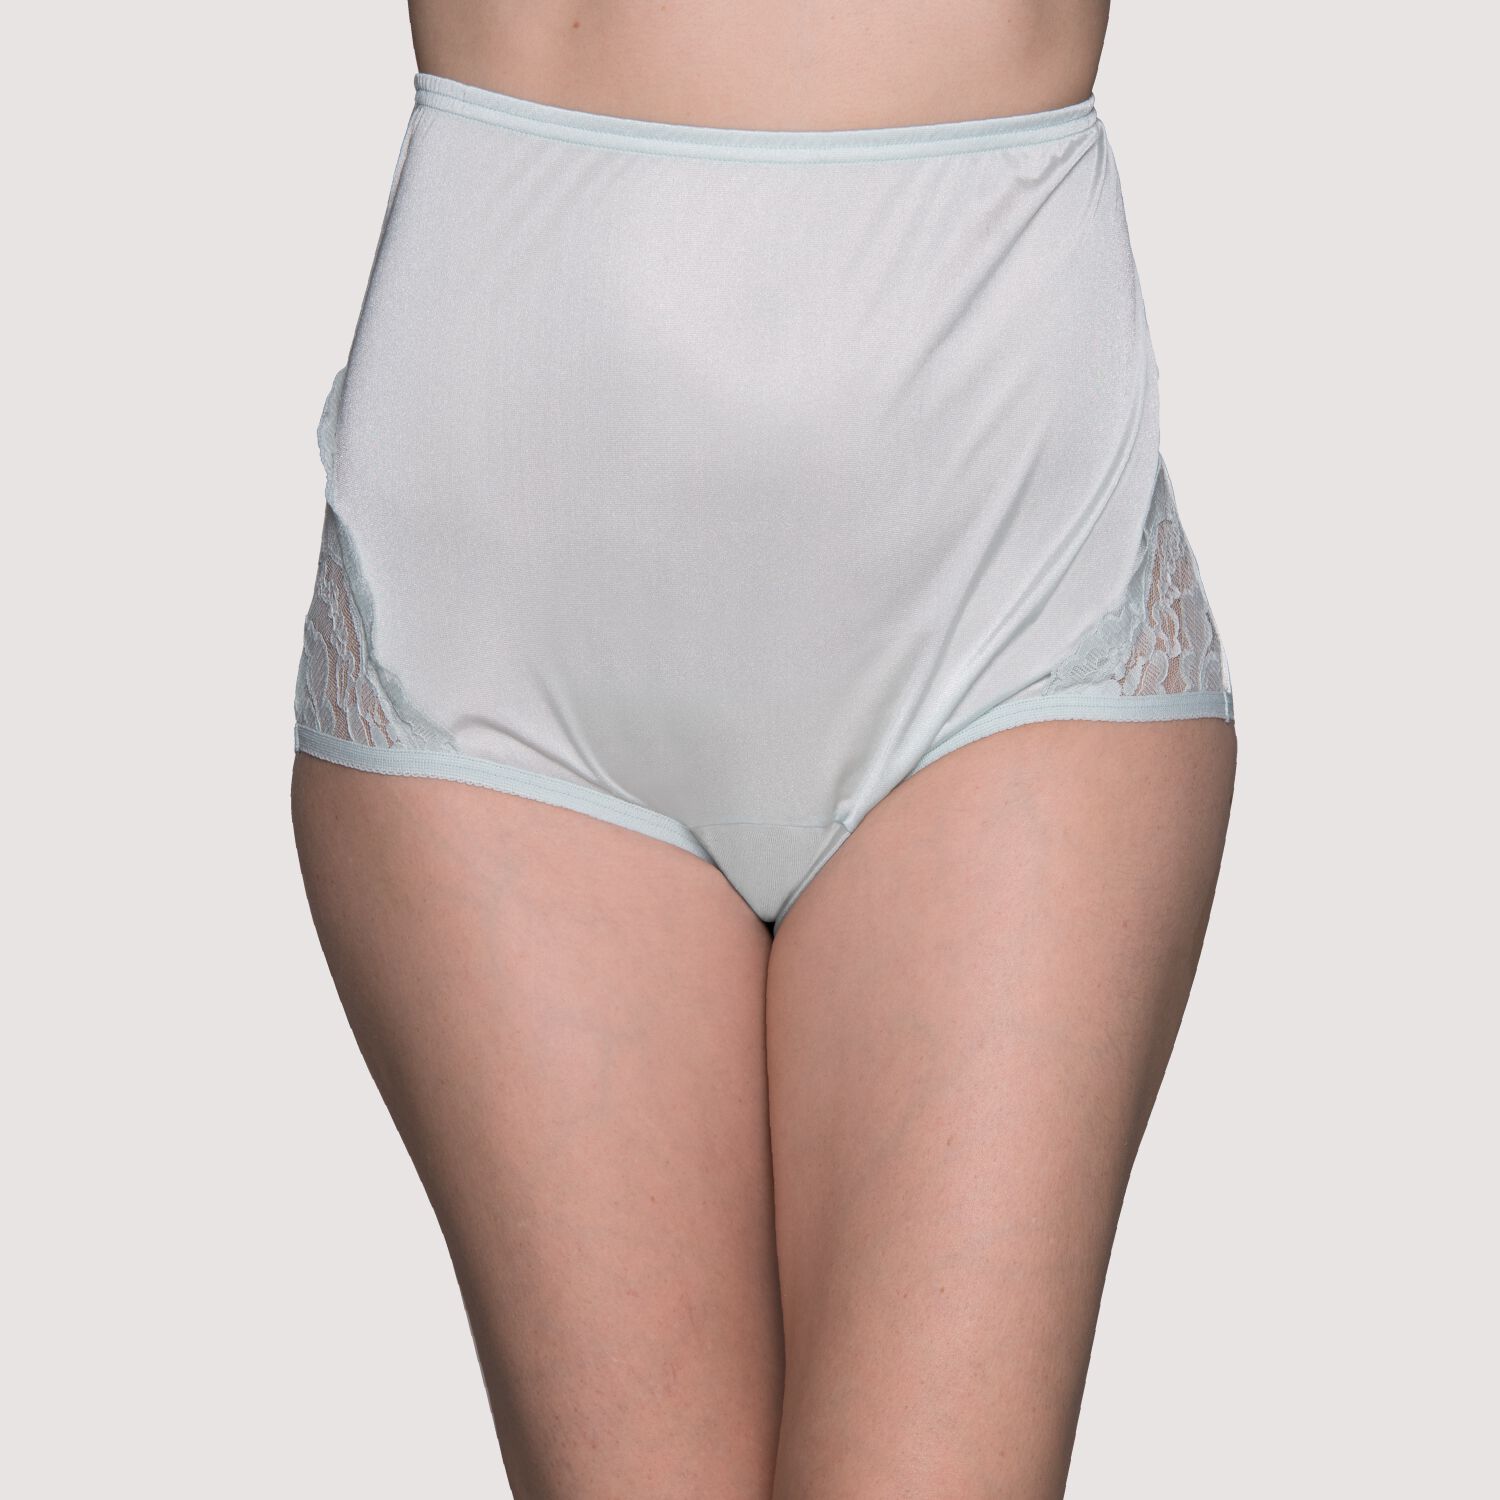 Ladies Full Briefs 5 Pack Underwear Knickers Lingerie Cotton Comfort Size 10-24